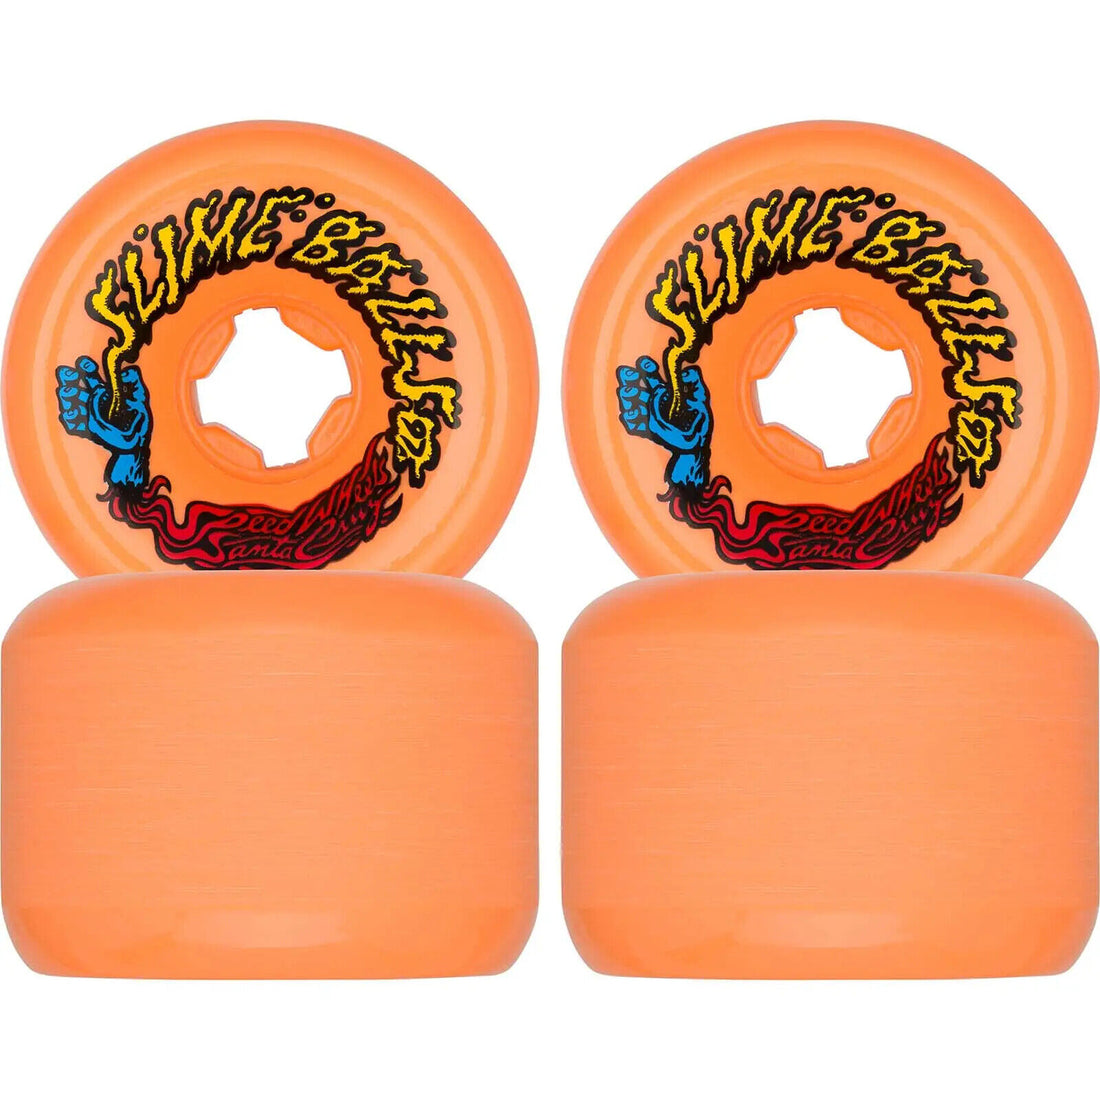 Santa Cruz Slime Balls Vomits Skateboard Wheel Orange 60mm